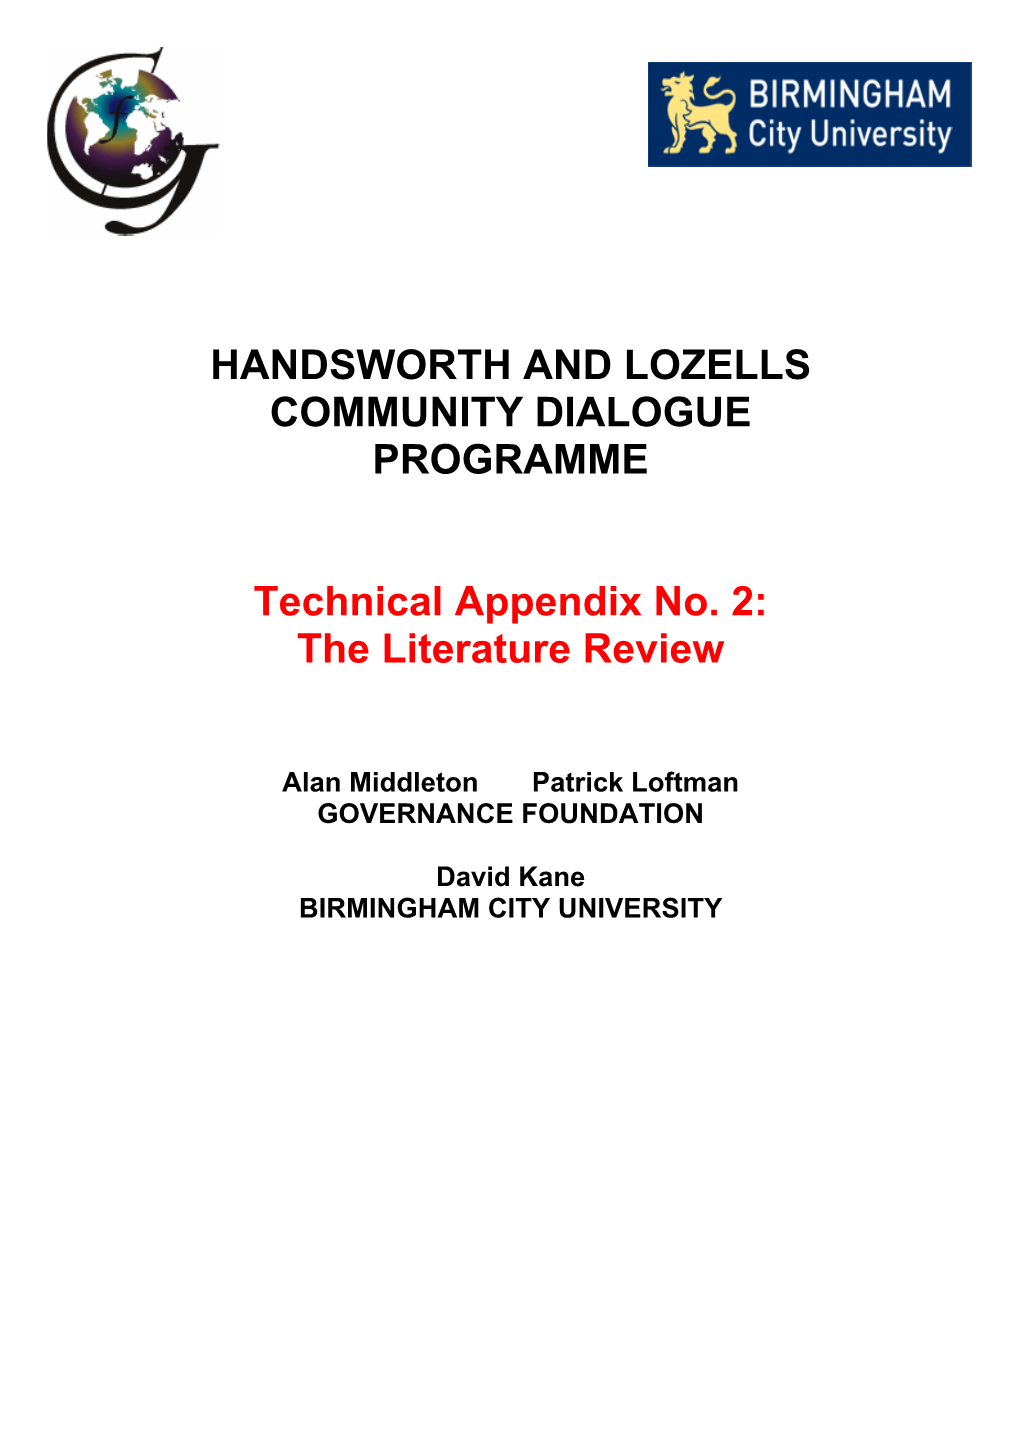 Handsworth and Lozells Community Dialogue Technical Appendix